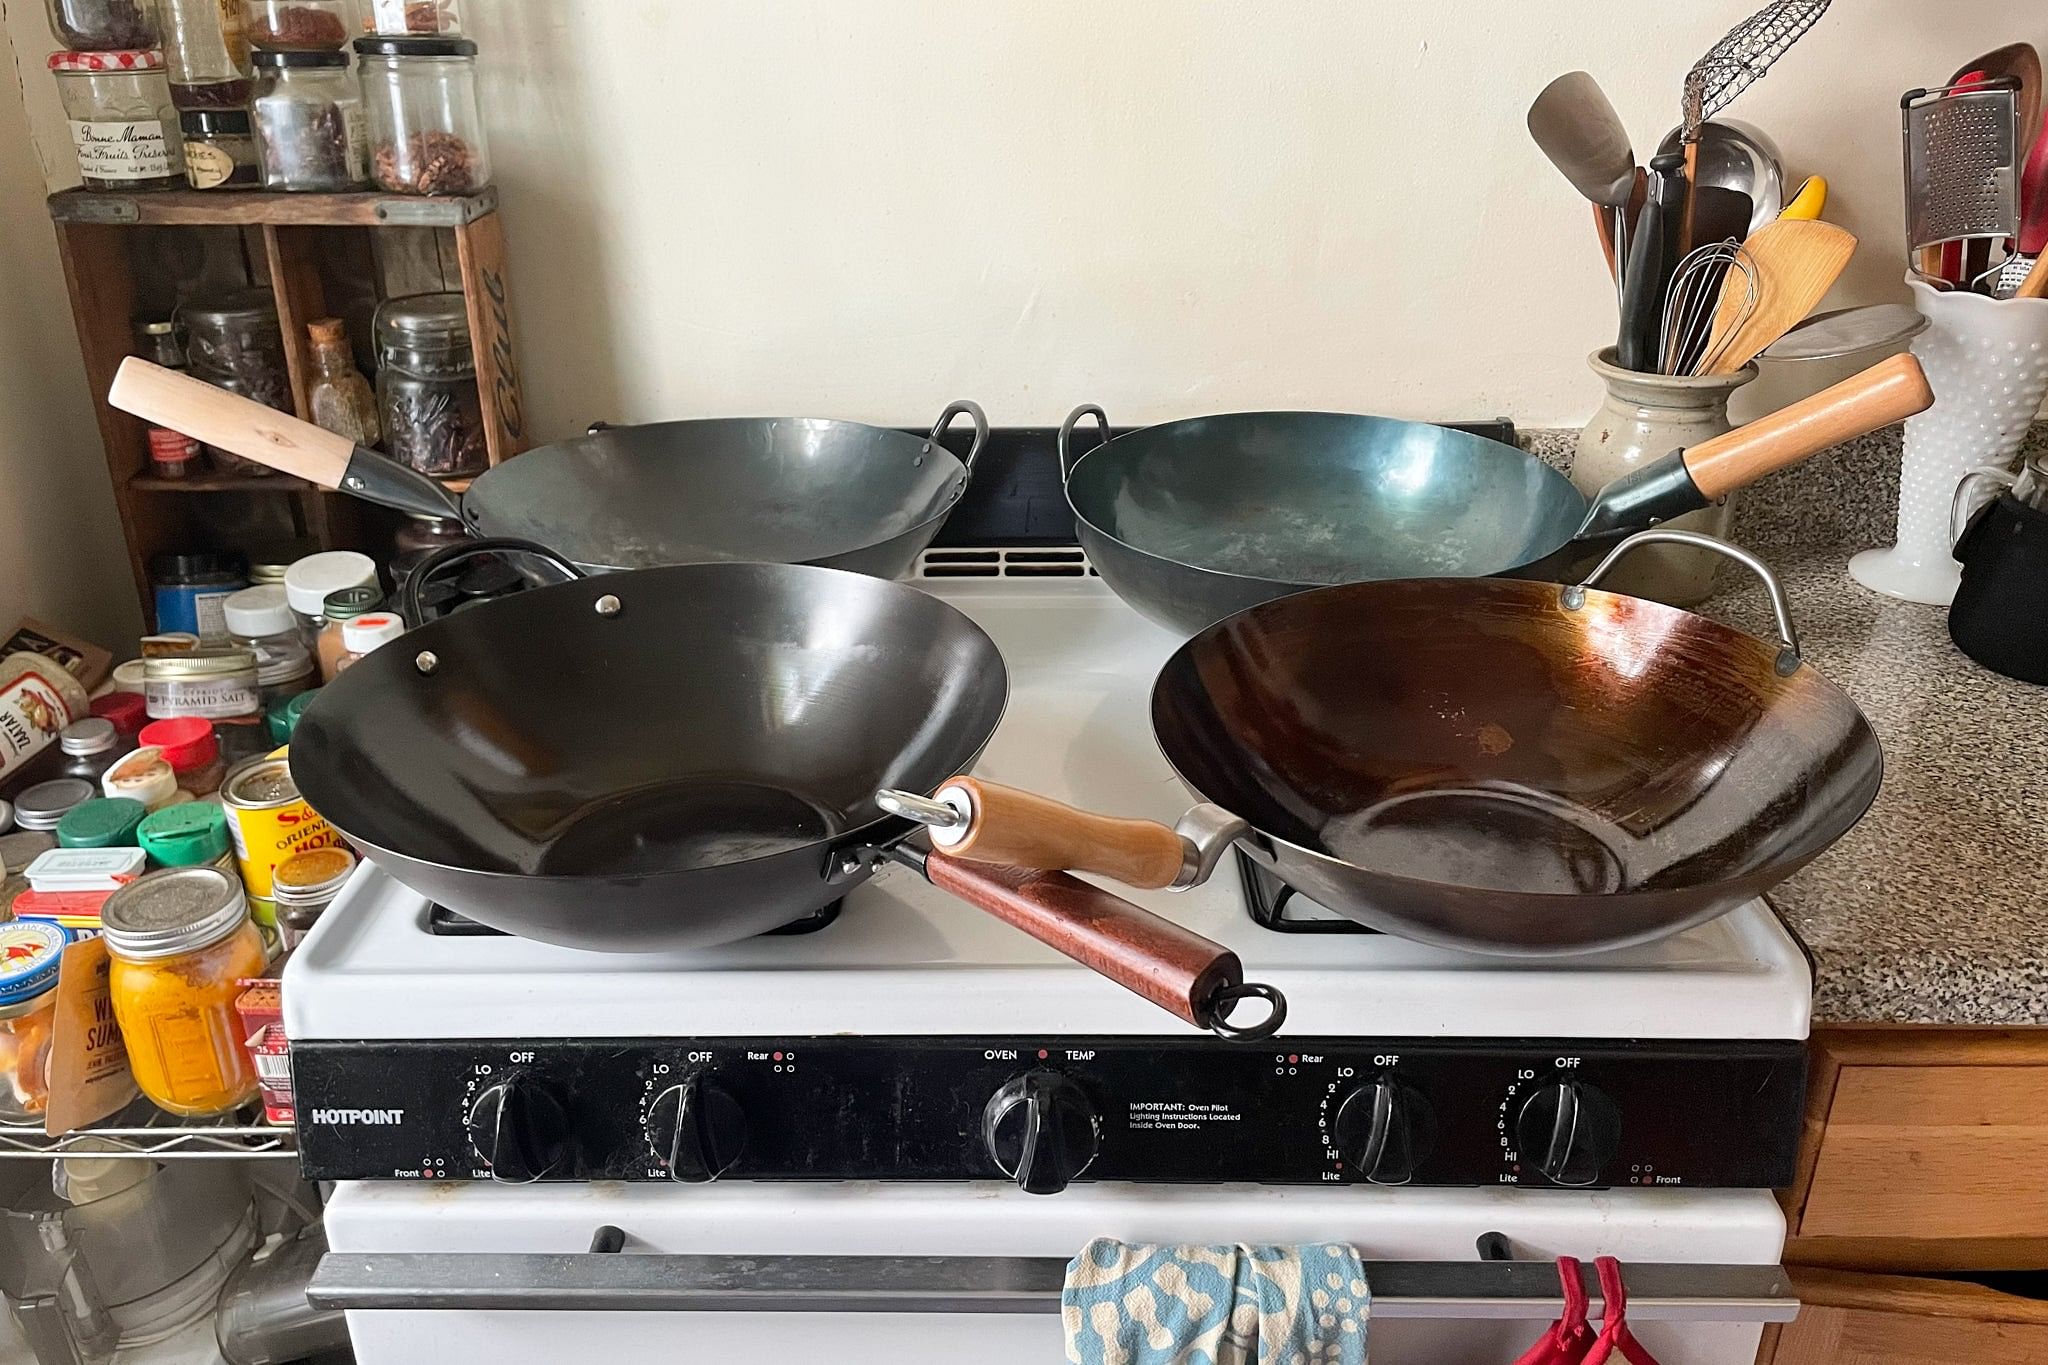 A high-quality wok on a stove